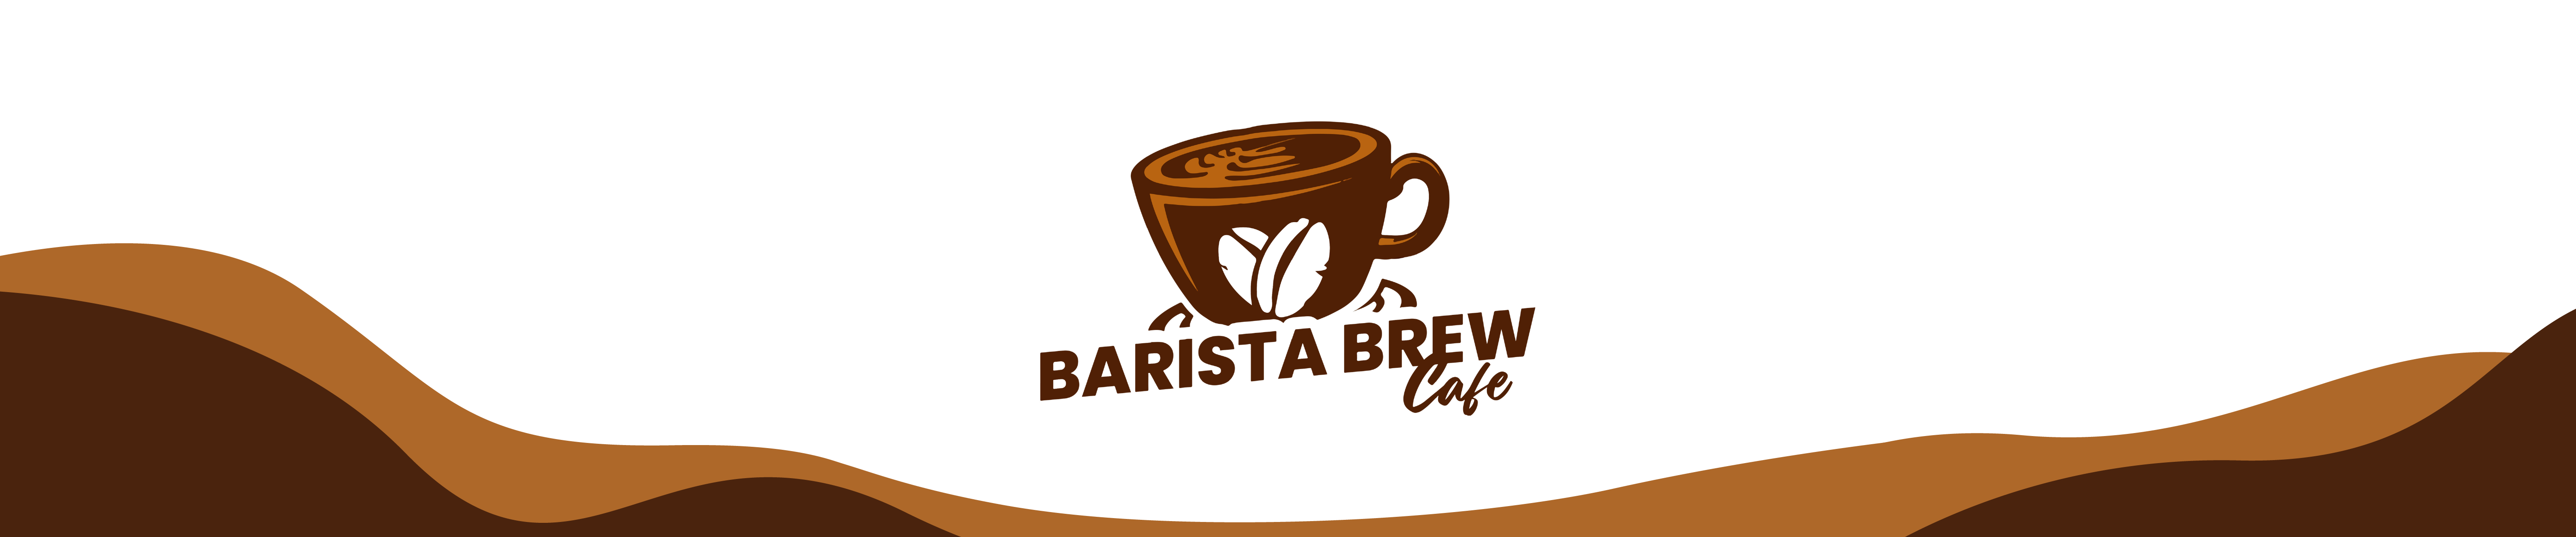 baristabrew logo